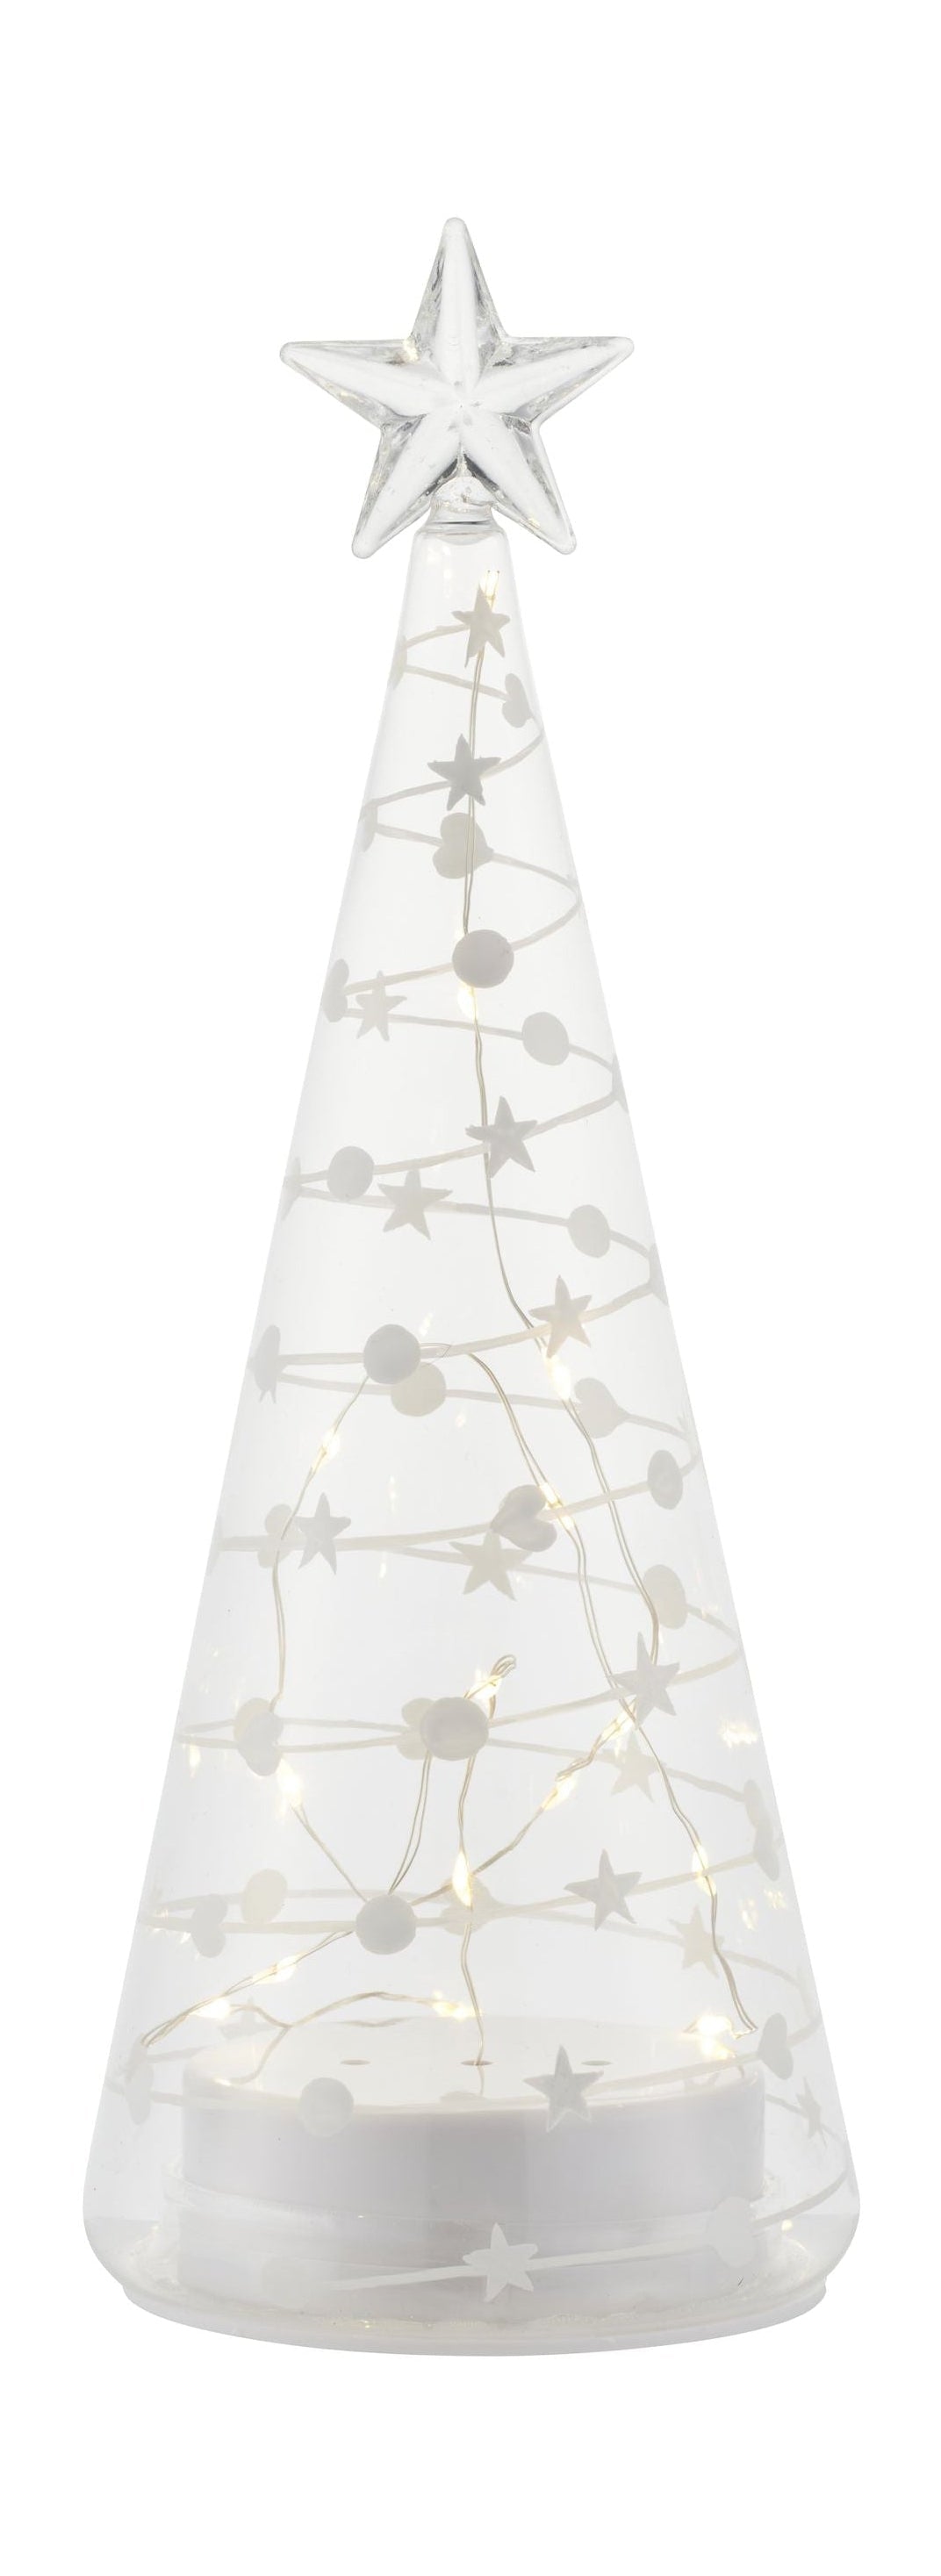 Sirius Sweet Christmas Tree, H26 Cm, White/Clear